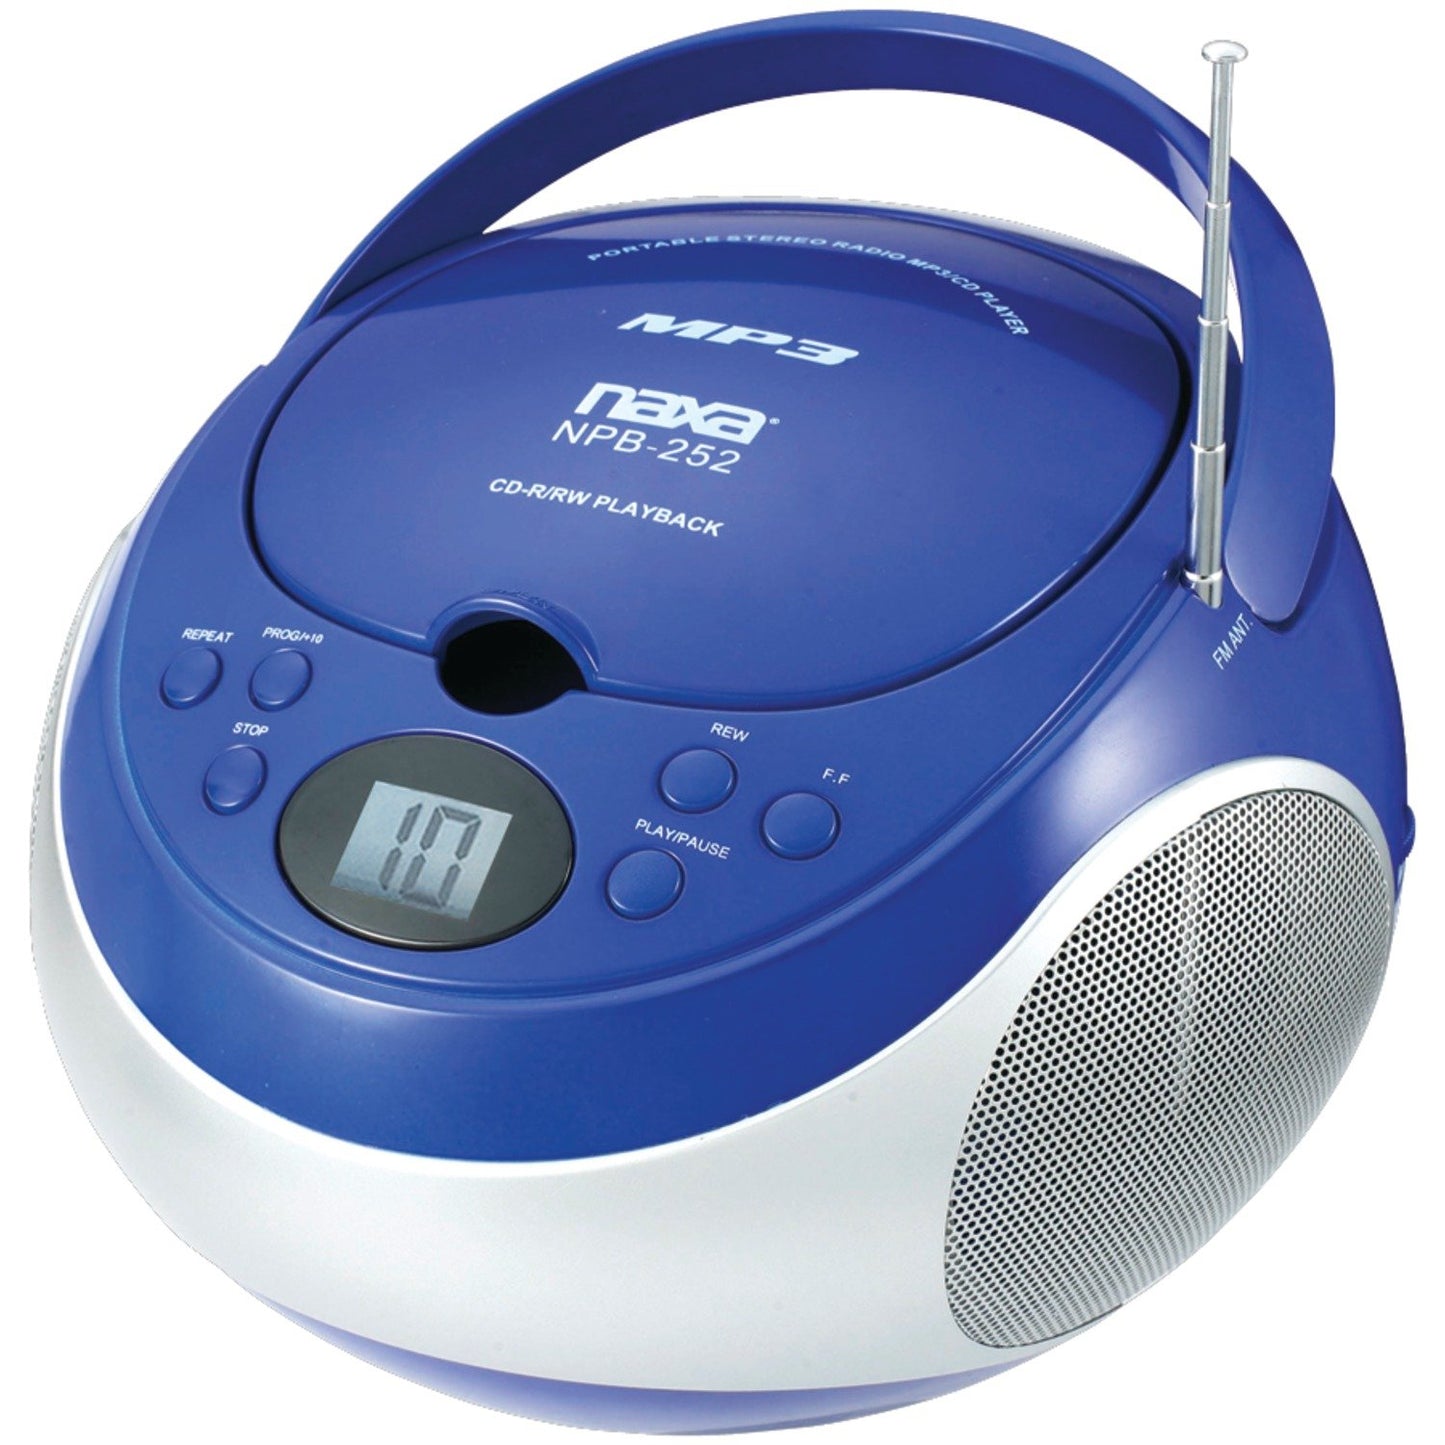 Naxa NPB252BL Portable CD/MP3 Player with AM/FM Stereo (Blue)